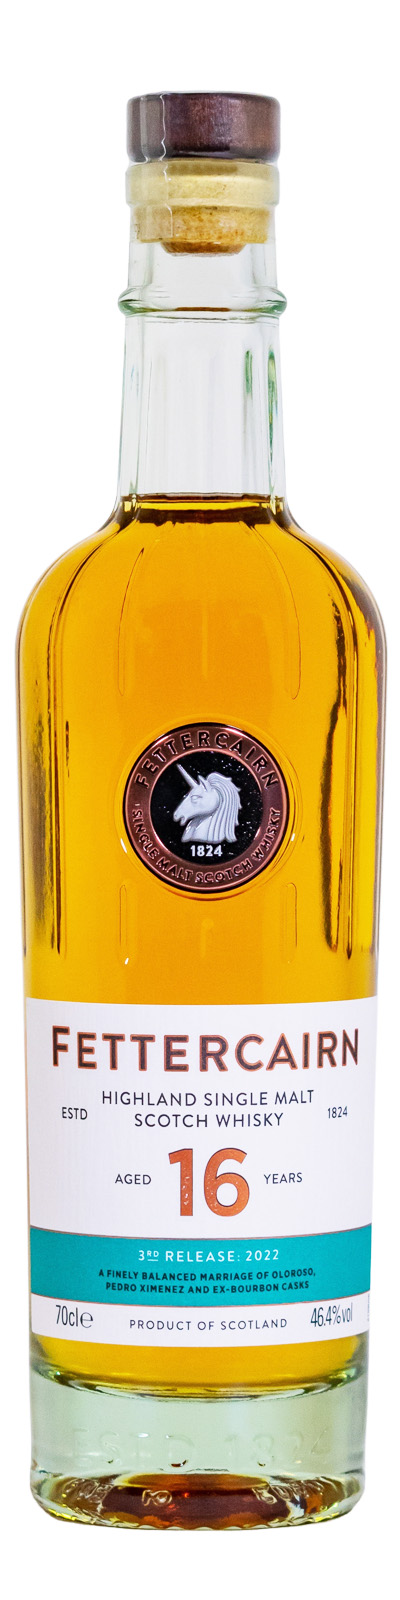 Fettercairn Highland Single Malt 16 Years - 0,7L 46,4% vol